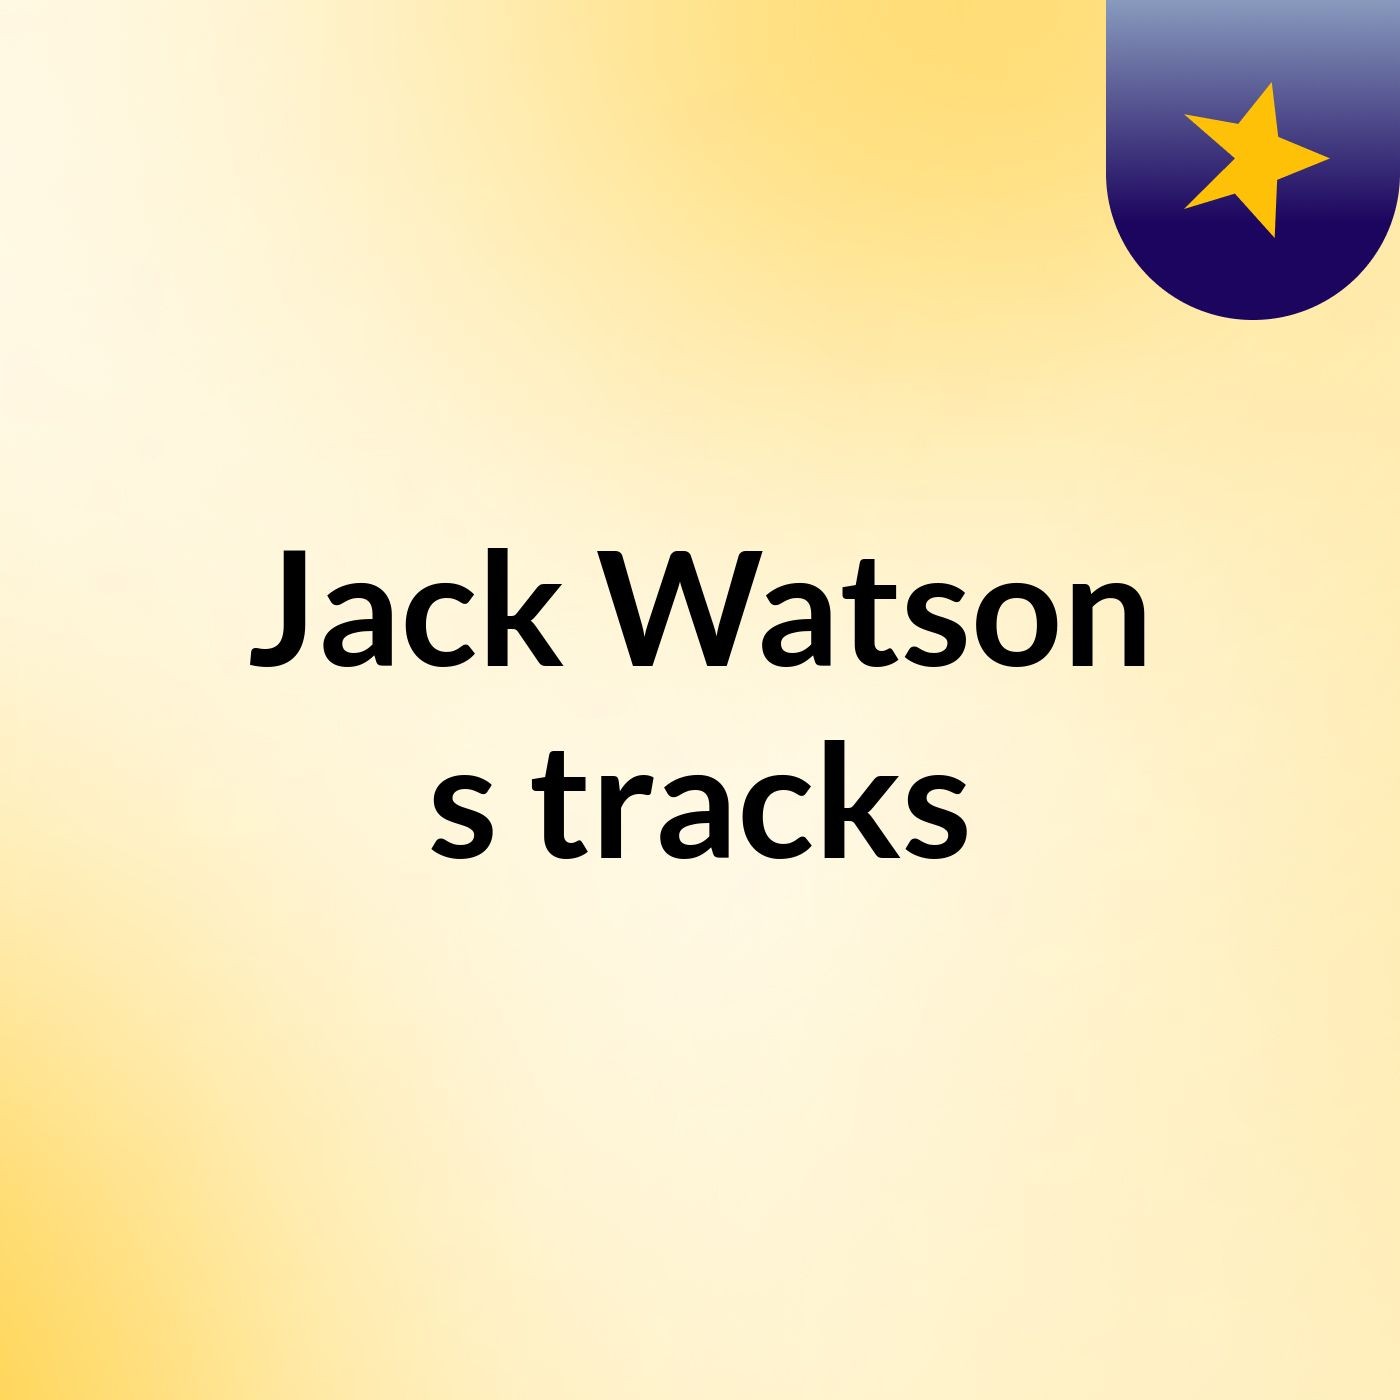 Jack Watson's tracks